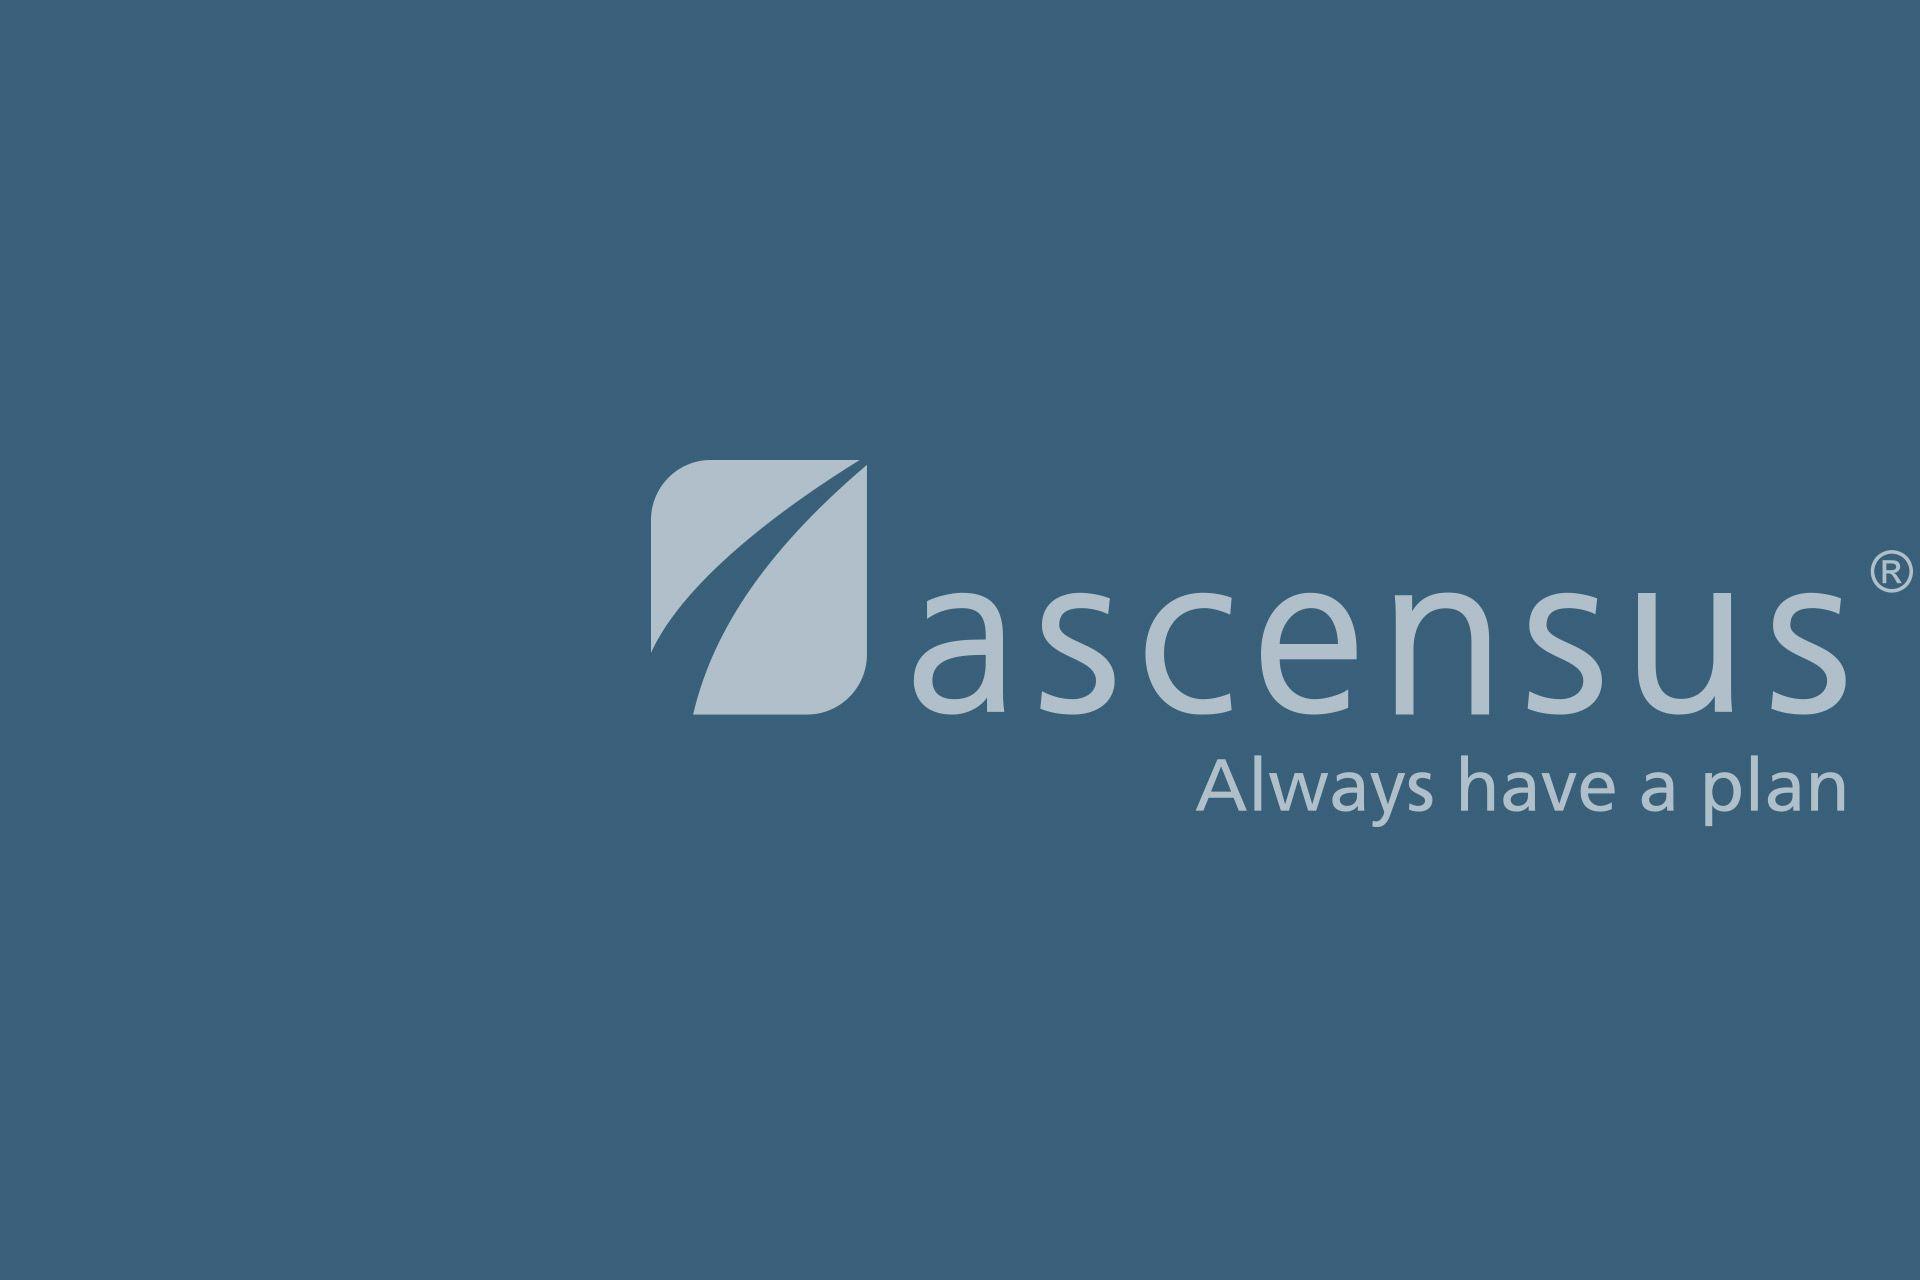 Ascensus Logo - David L. Musto Named President of Ascensus 1 - Ascensus